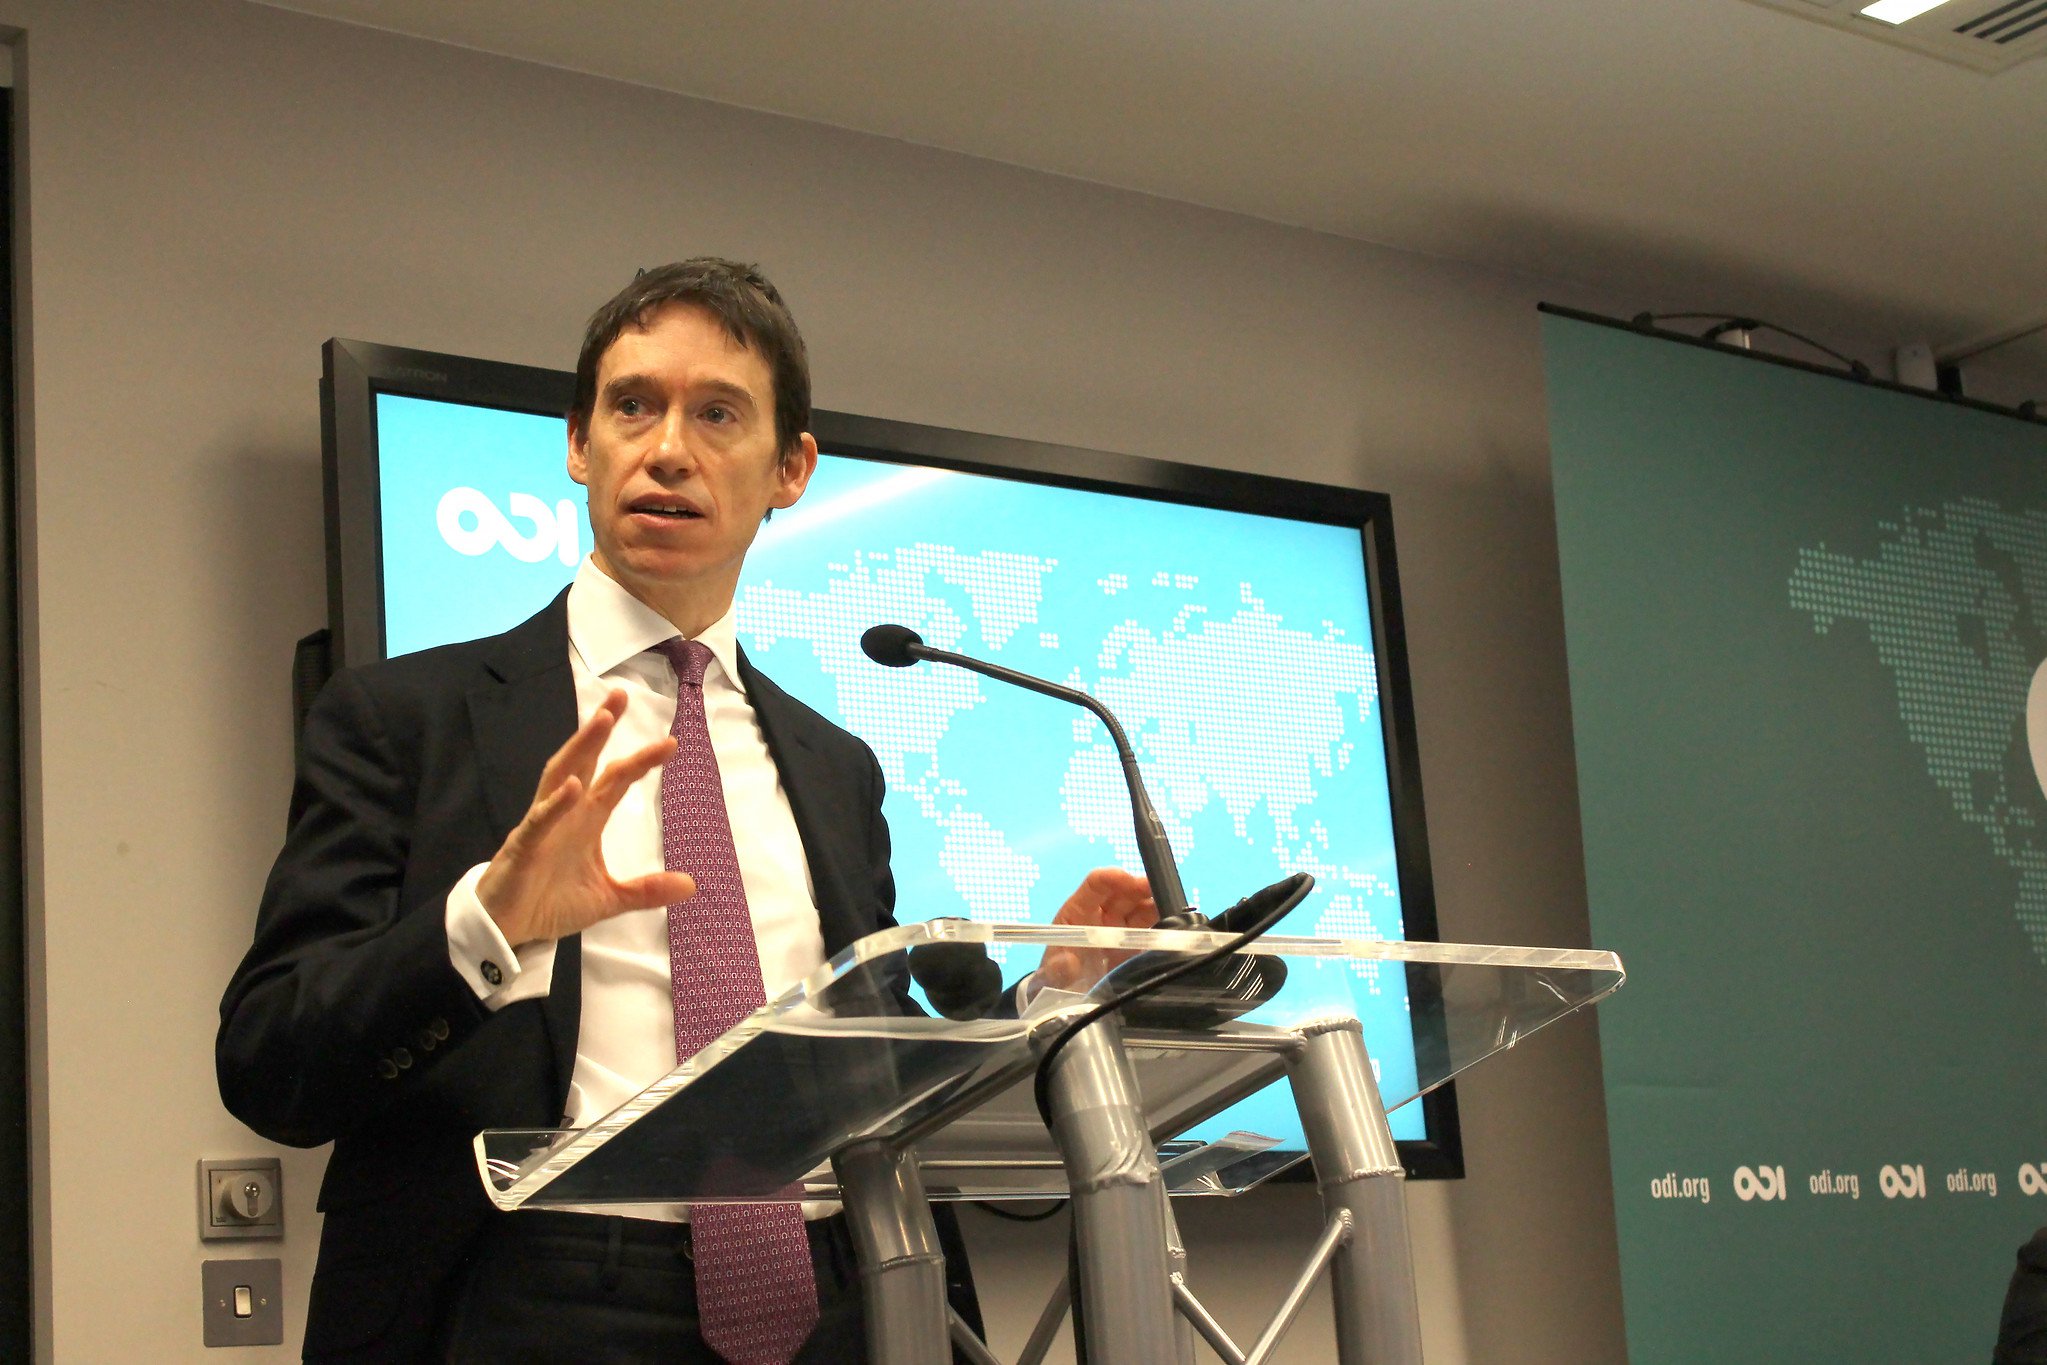 Rory Stewart delivers a keynote speech at ODI